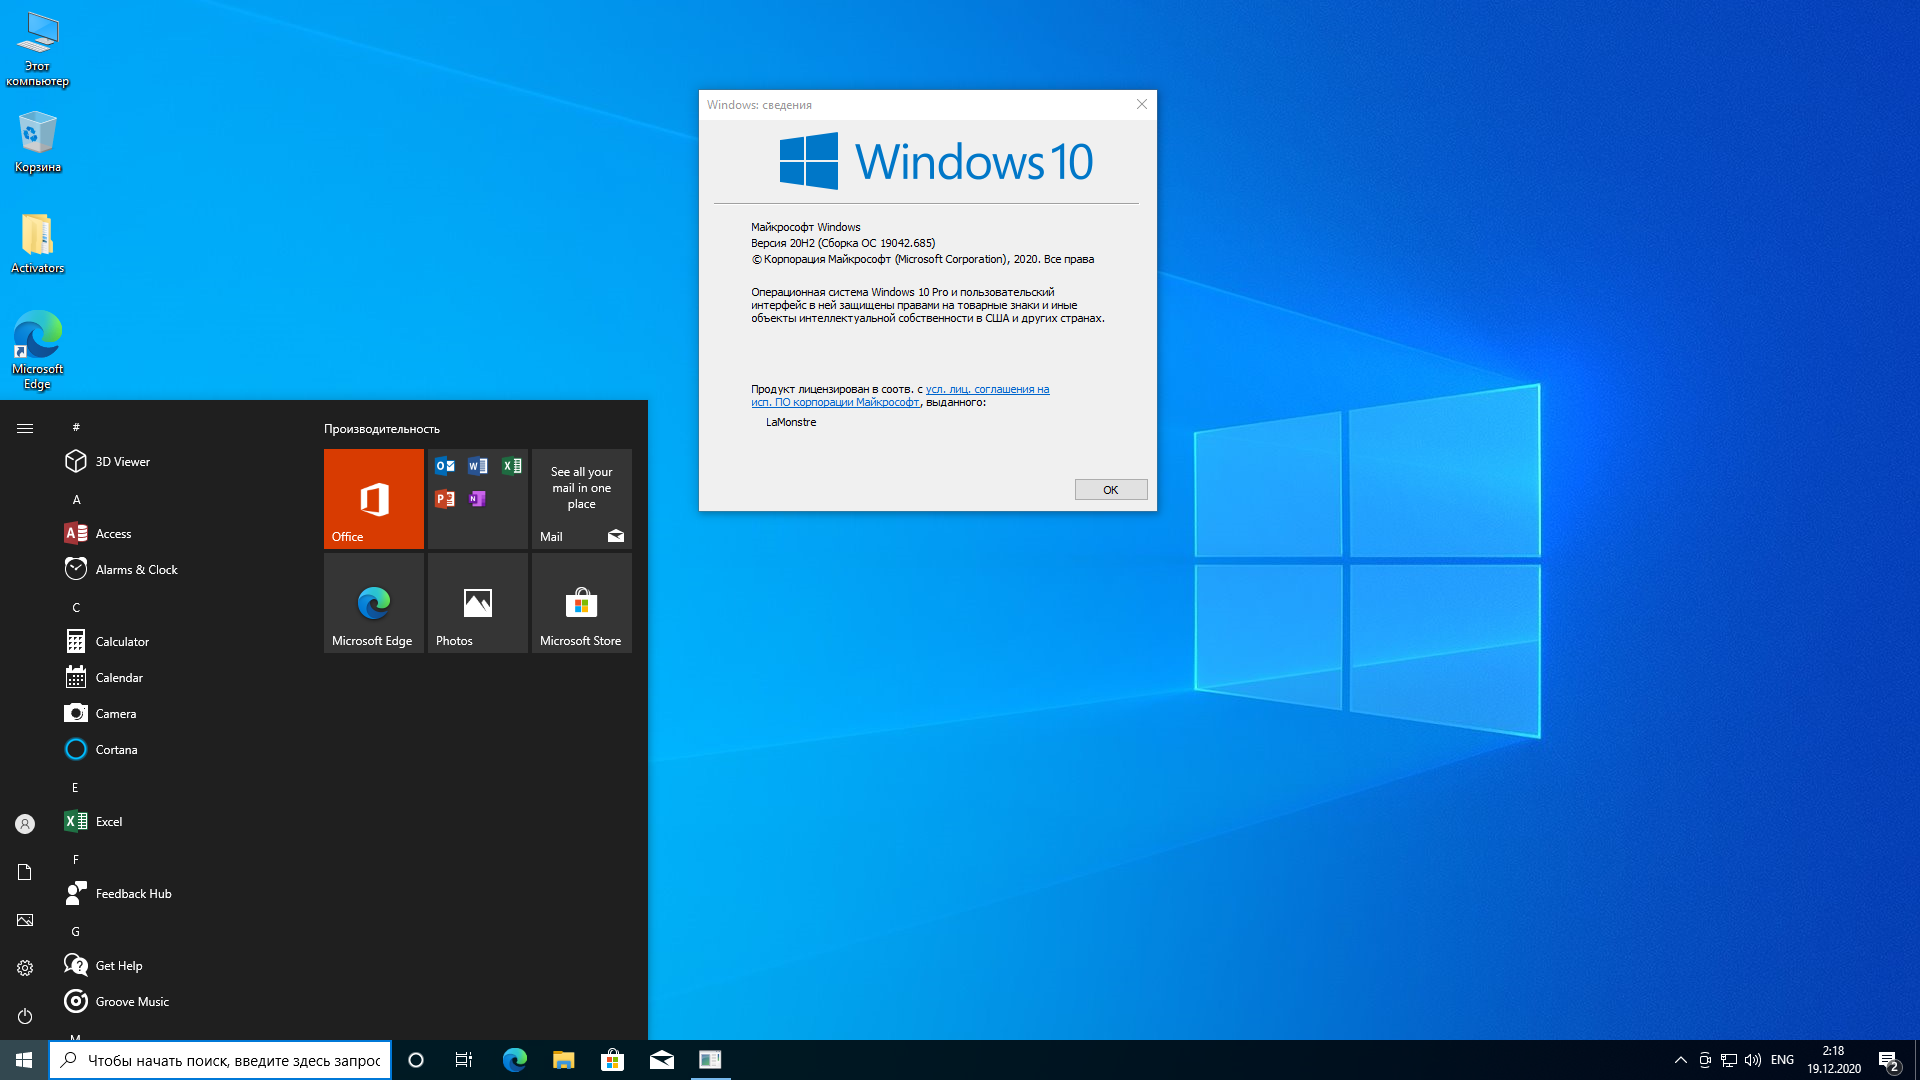 windows 10 pro 20h2 iso download 32-bit